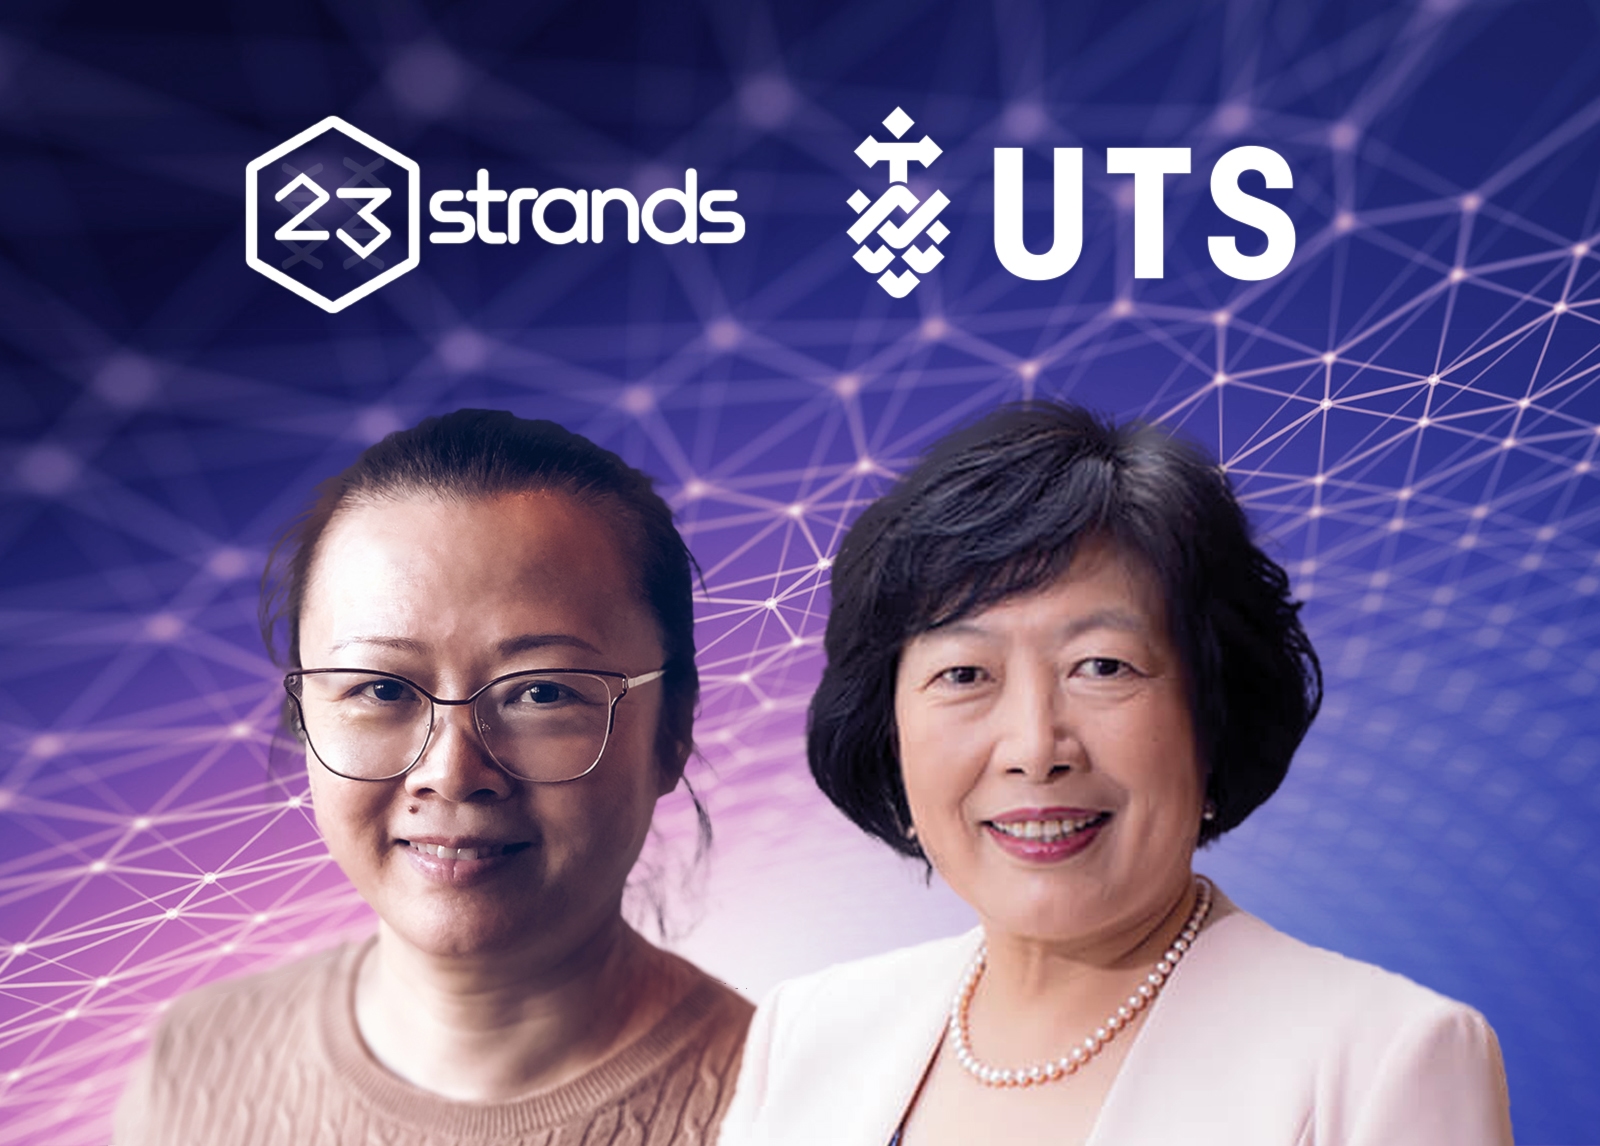 Dr. Hua Lin (23Strands) & Professor Jie Lu (UTS)